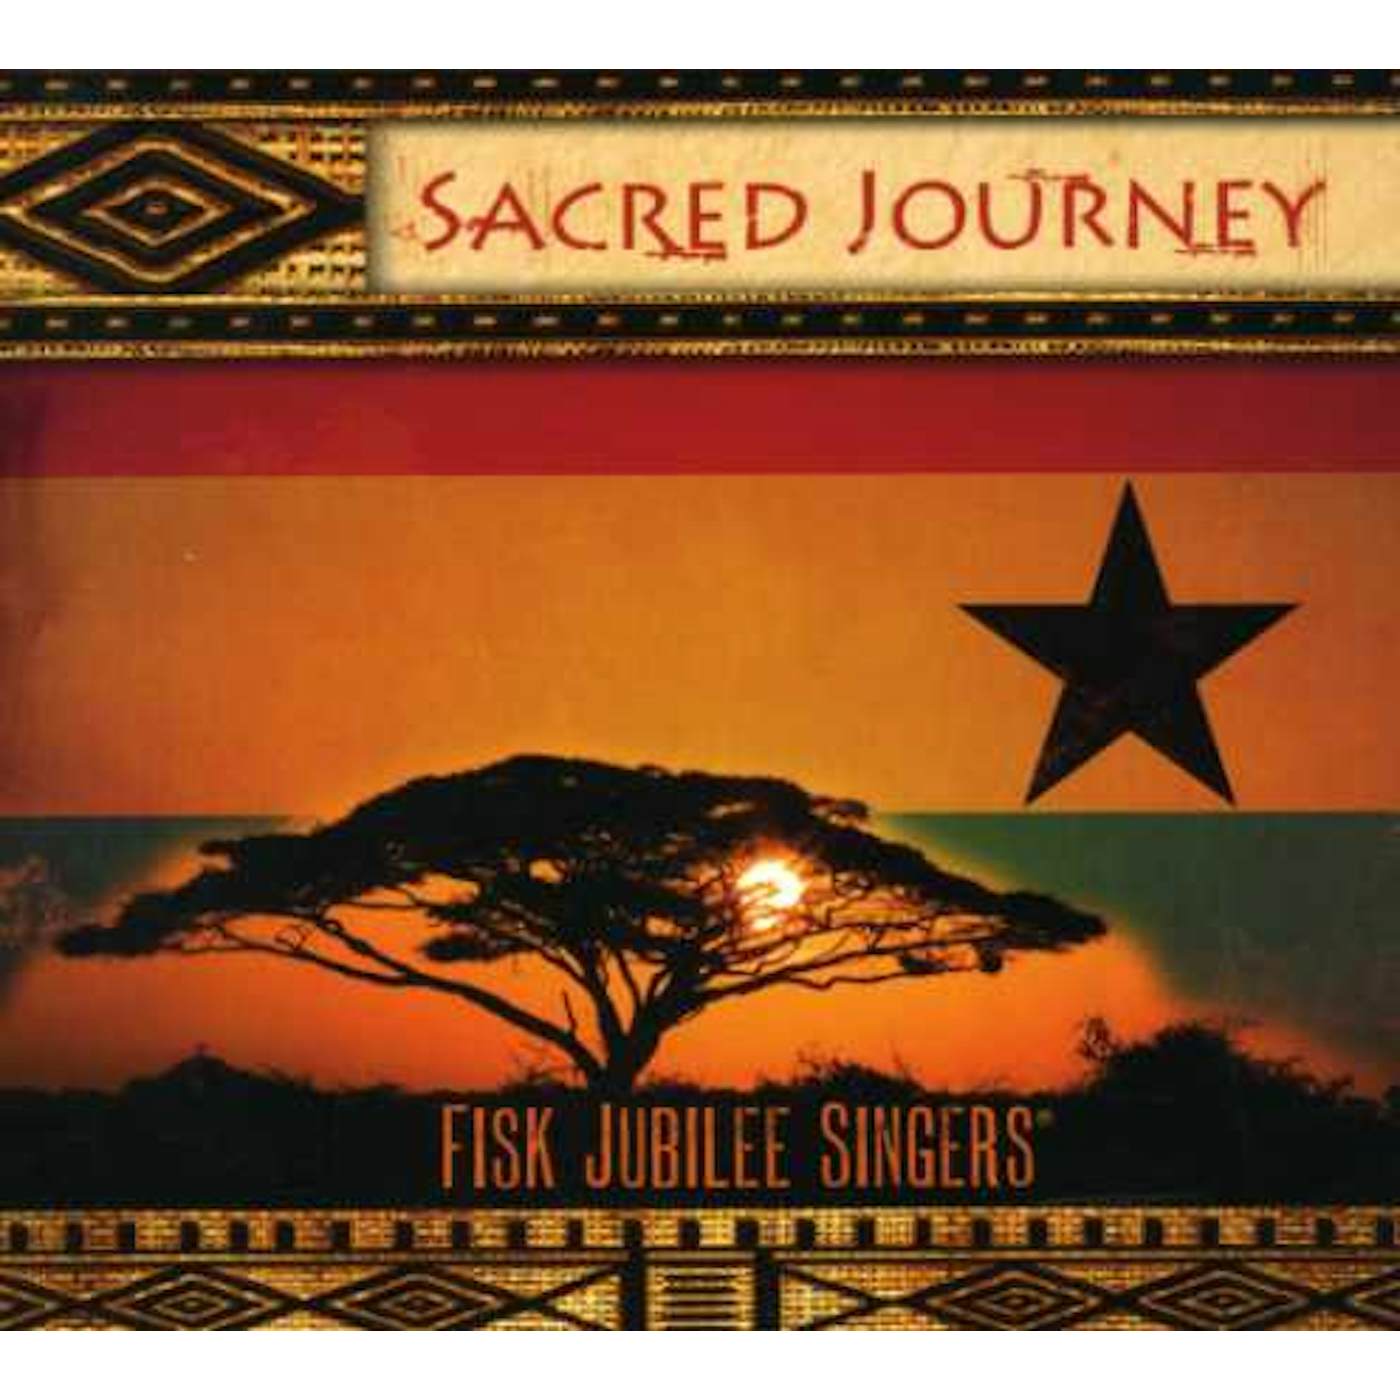 The Fisk Jubilee Singers SACRED JOURNEY CD